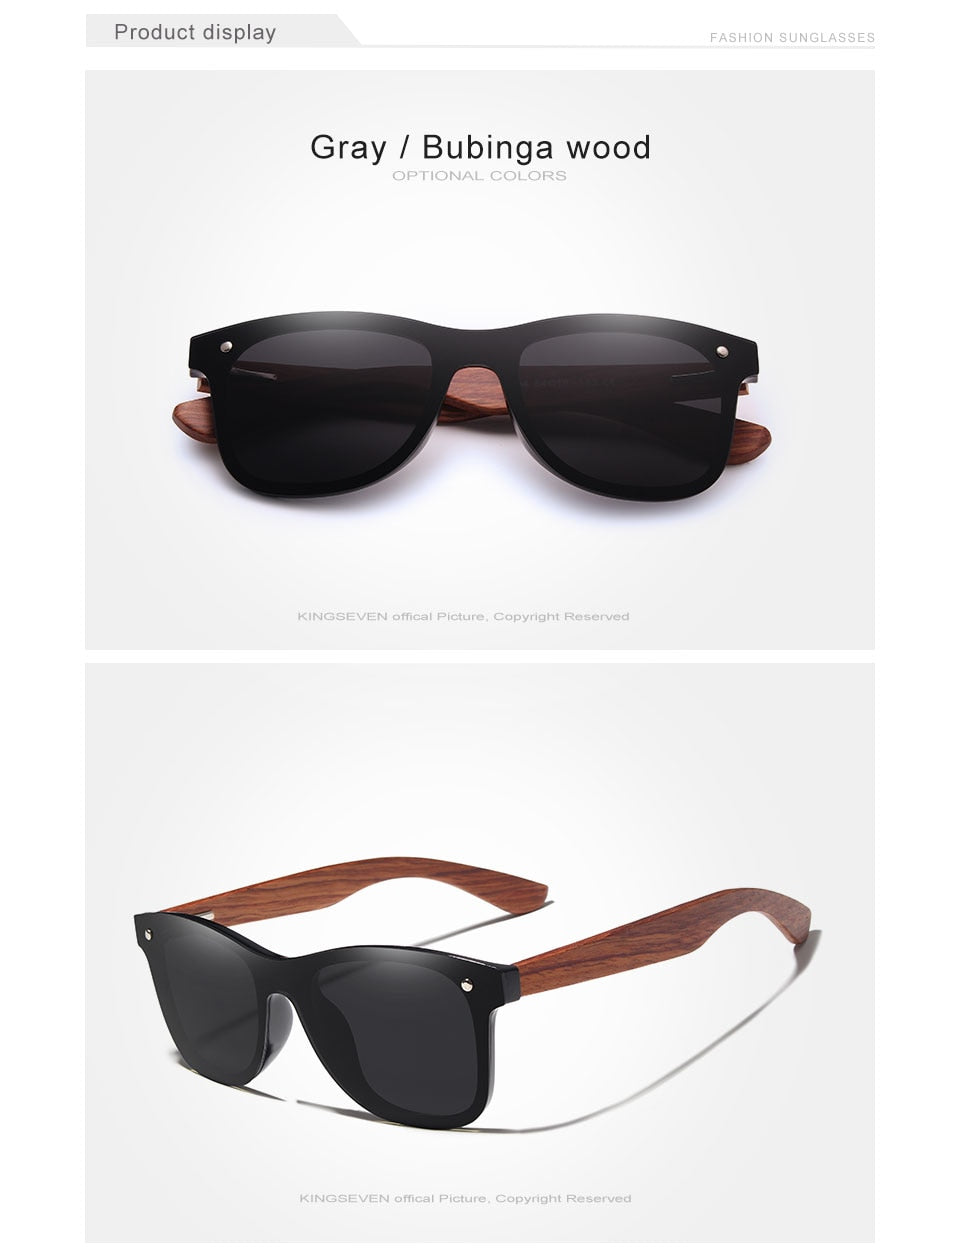 Men's Sunglasses Polarized Rimless – FuzWeb